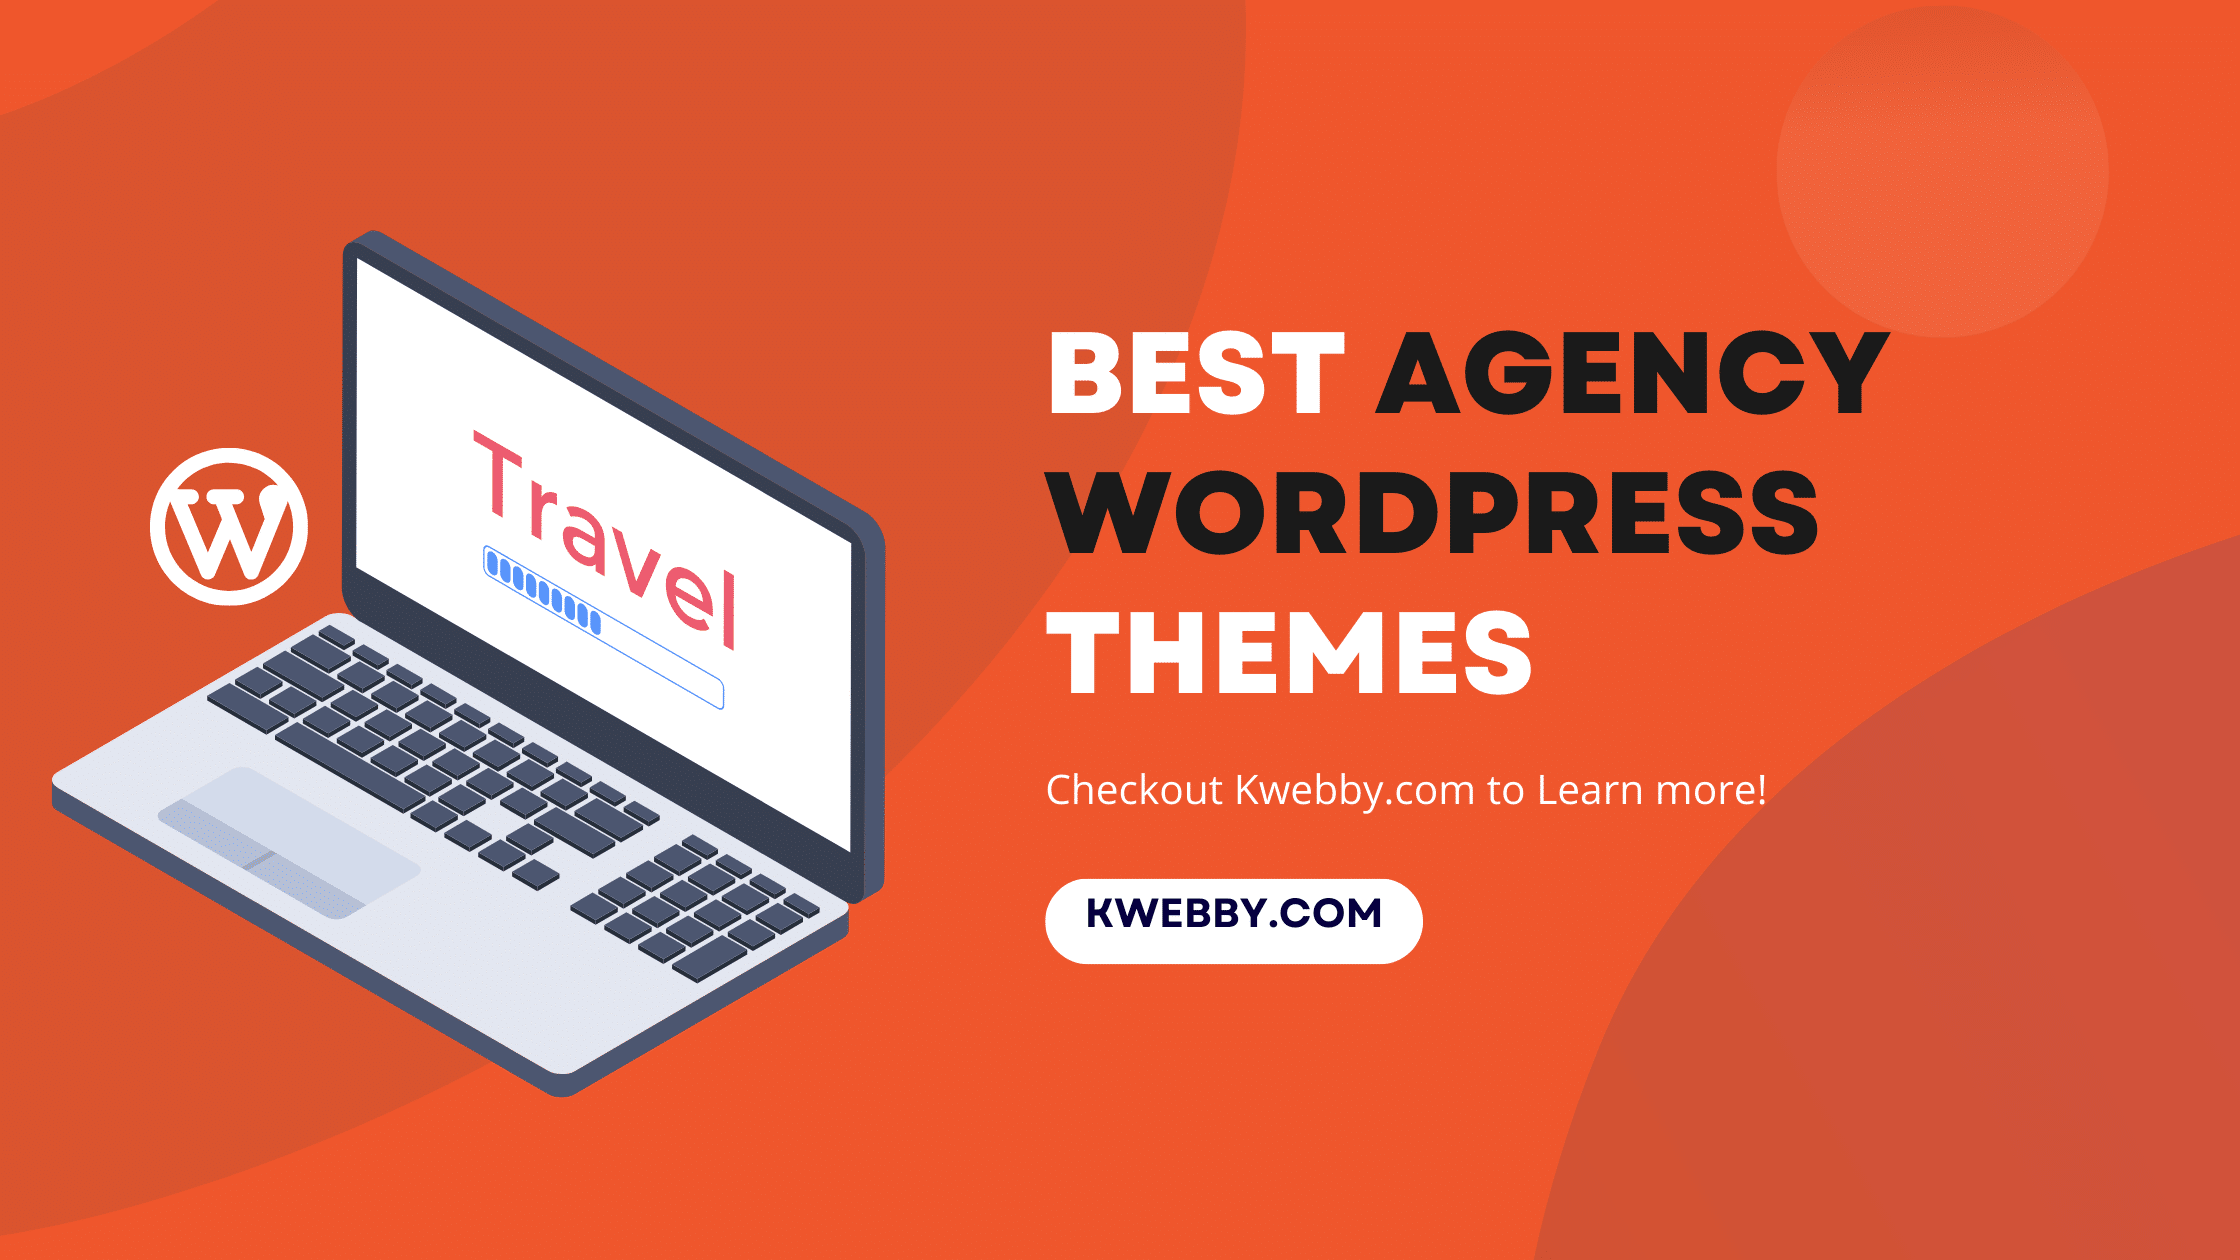 Best Agency WordPress Themes